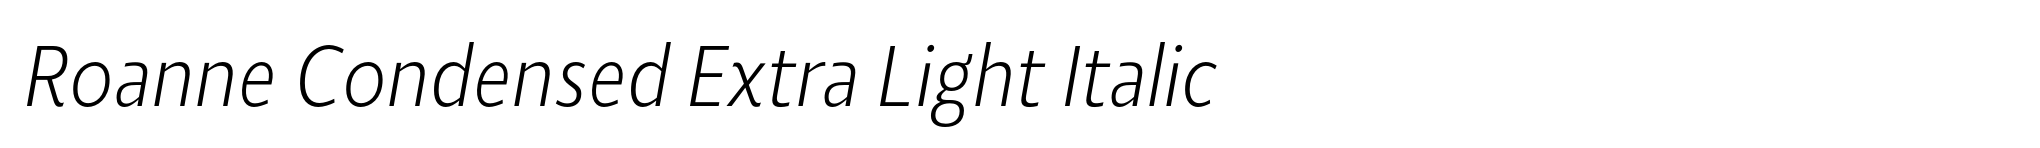 Roanne Condensed Extra Light Italic image